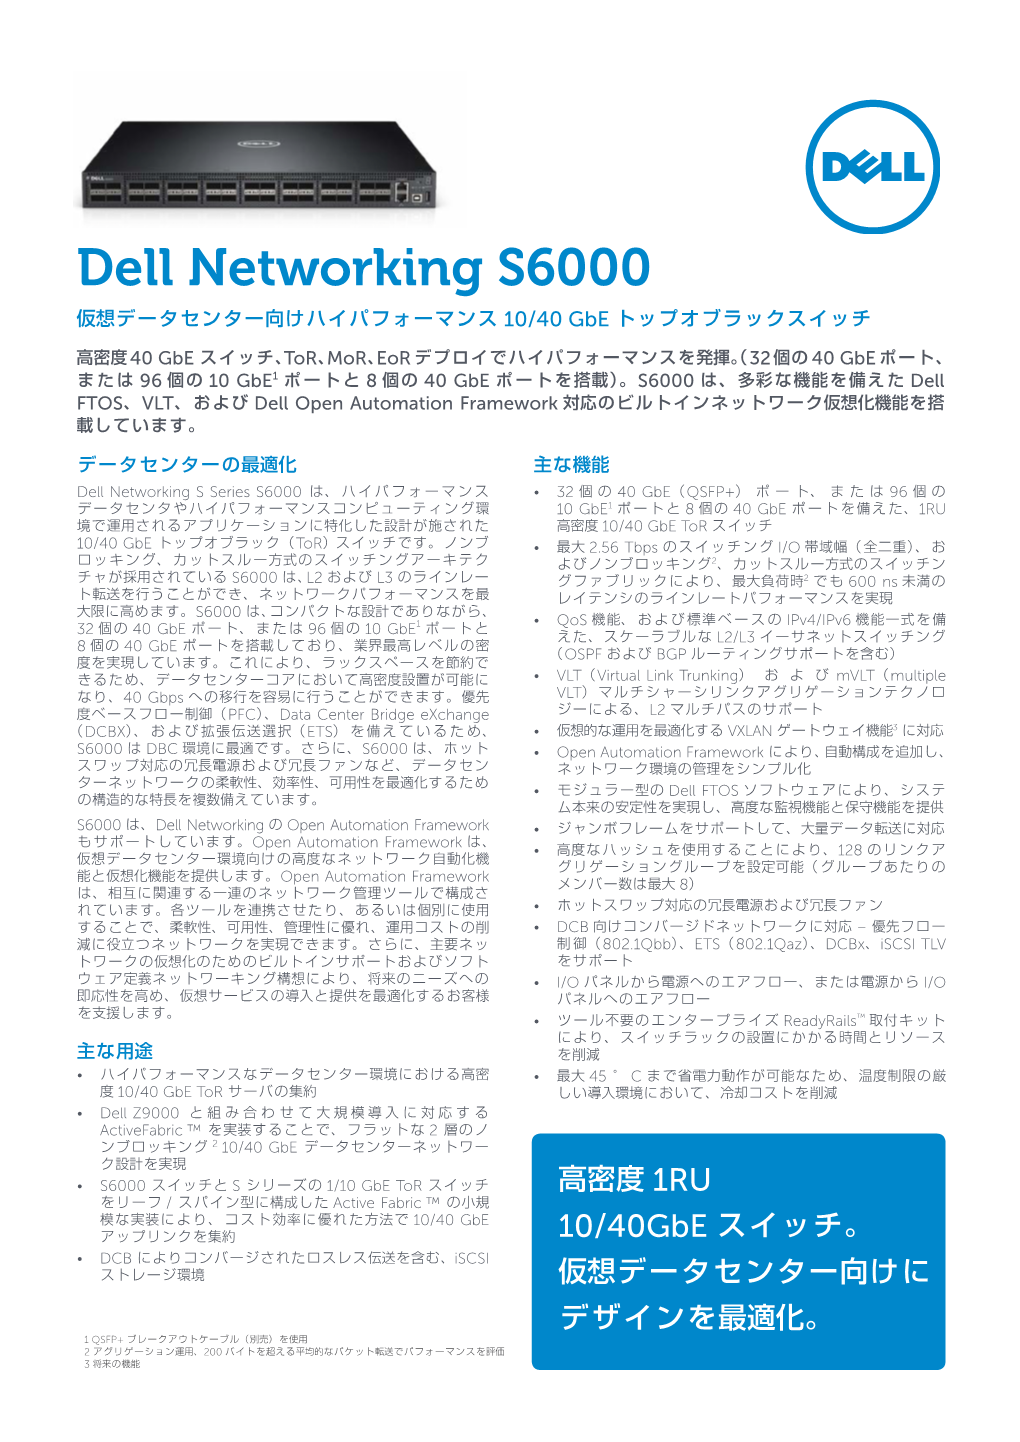 Dell Networking S6000 仮想データセンター向けハイパフォーマンス 10/40 Gbe トップオブラックスイッチ